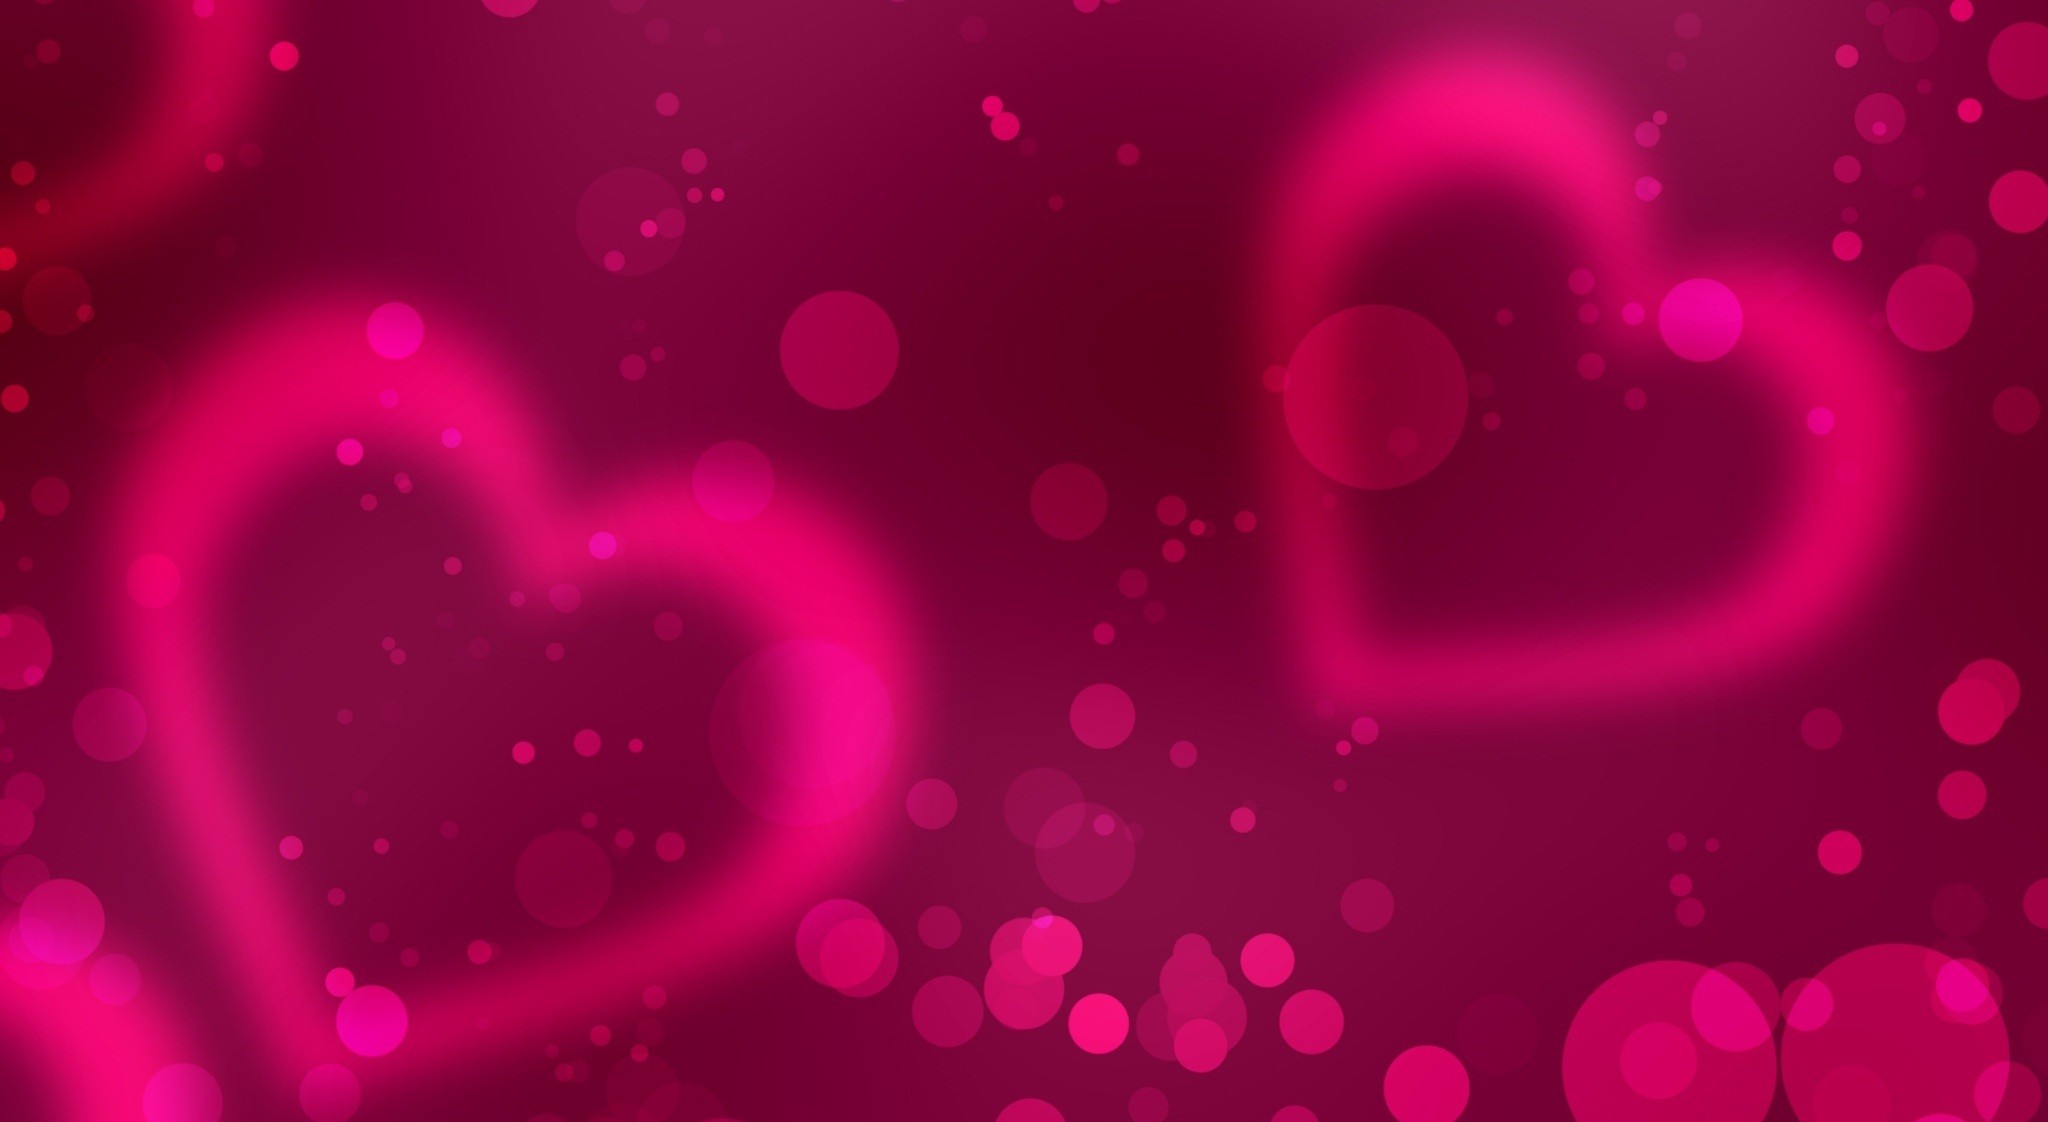 Google Image Valentine Wallpaper Hearts Background